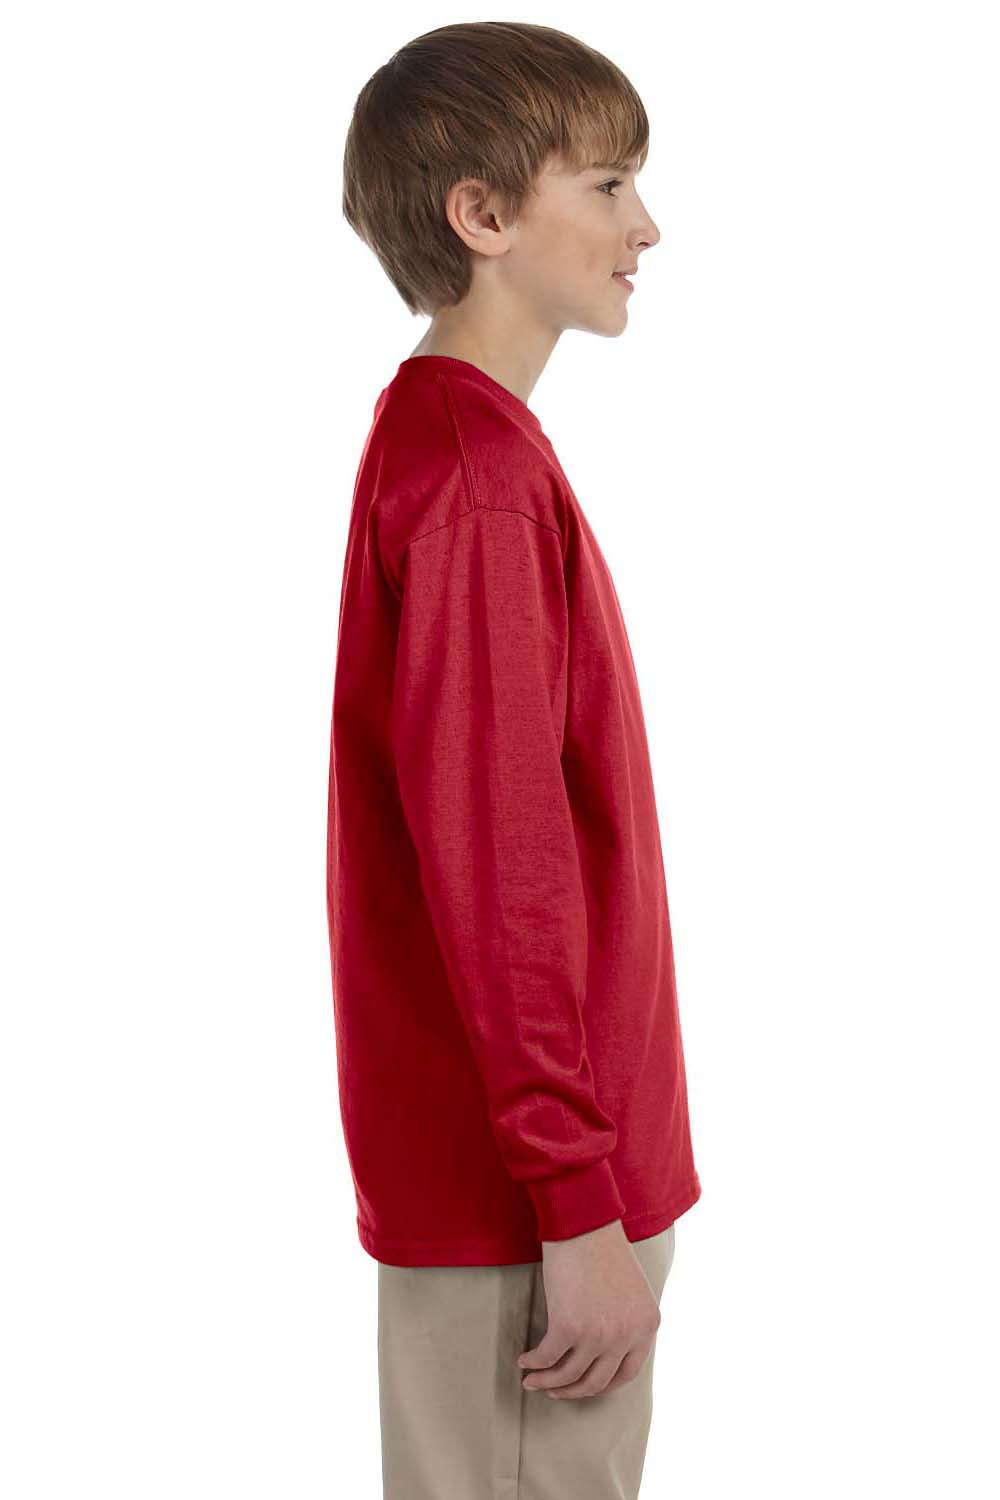 Jerzees 29BL Youth Dri-Power Moisture Wicking Long Sleeve Crewneck T-Shirt Red Side